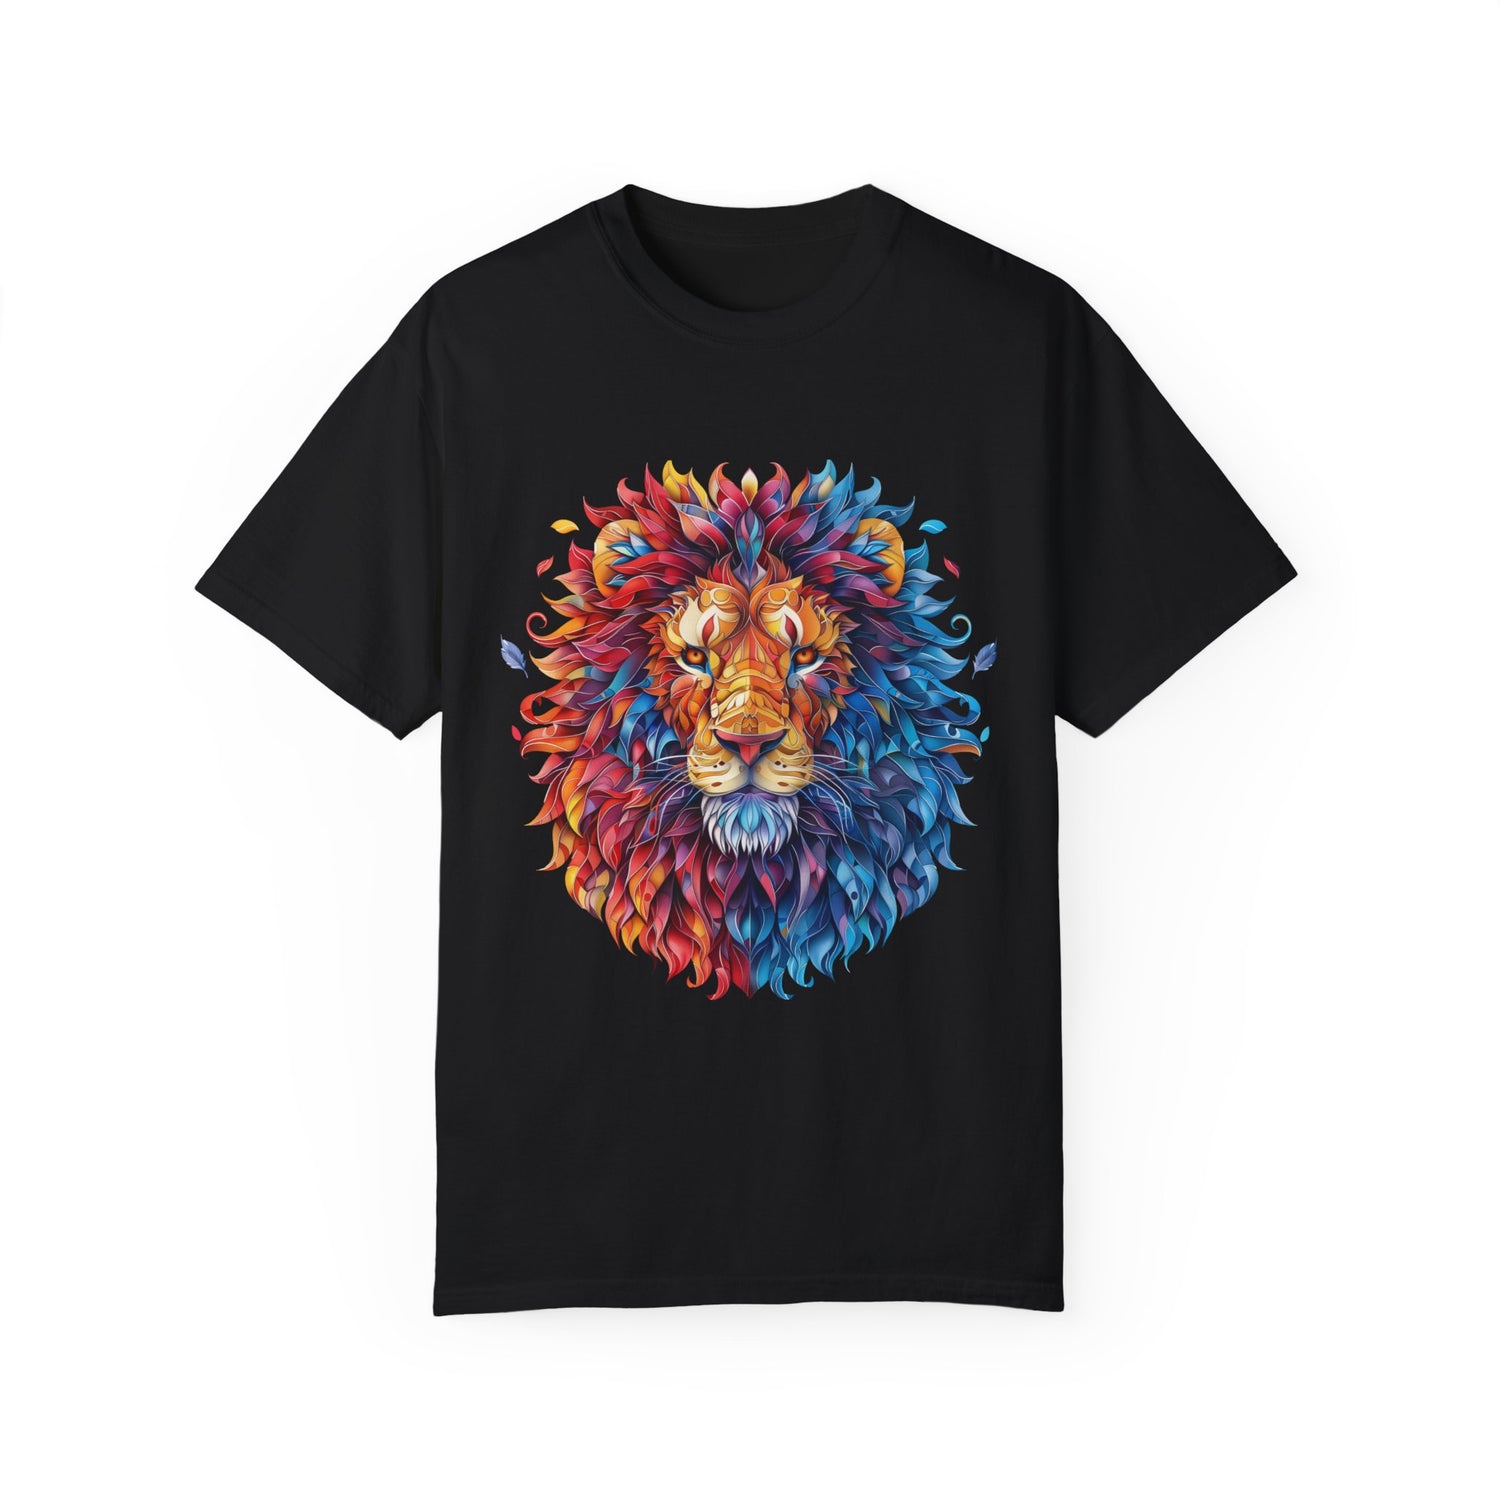 Lion Head Cool Graphic Design Novelty Unisex Garment-dyed T-shirt Cotton Funny Humorous Graphic Soft Premium Unisex Men Women Black T-shirt Birthday Gift-1